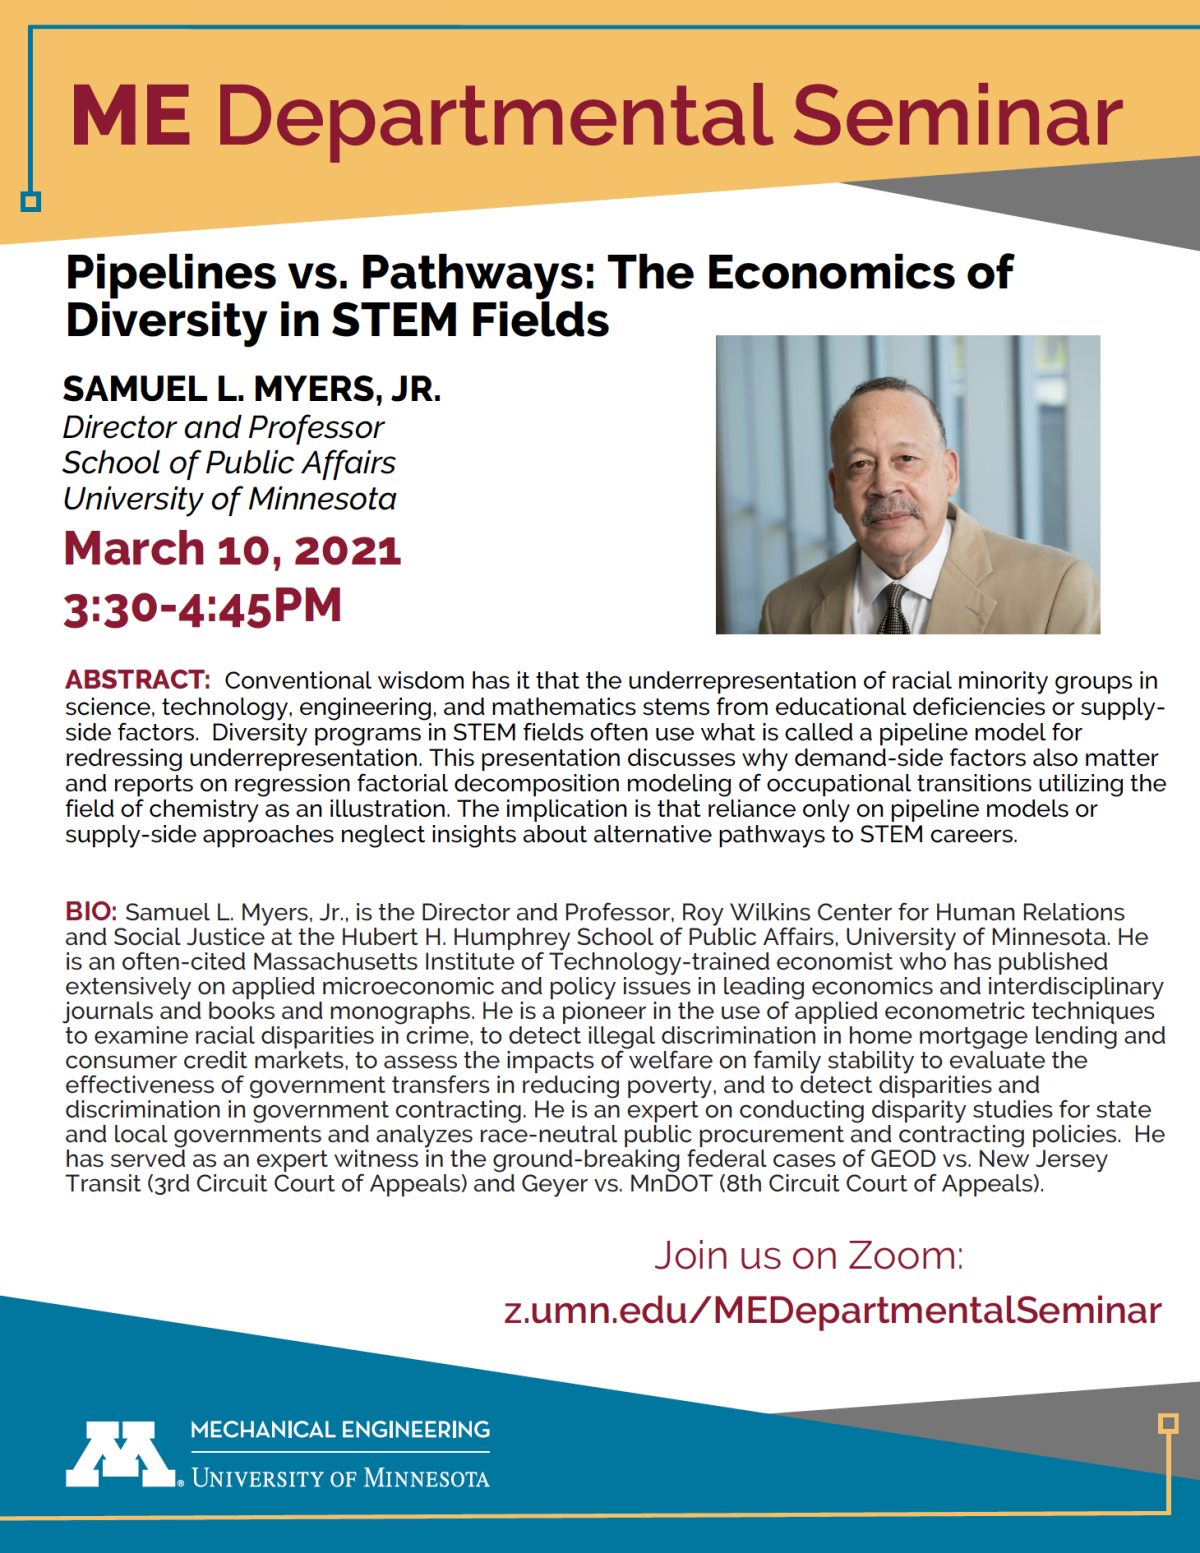 Samuel Myers Departmental Seminar flyer